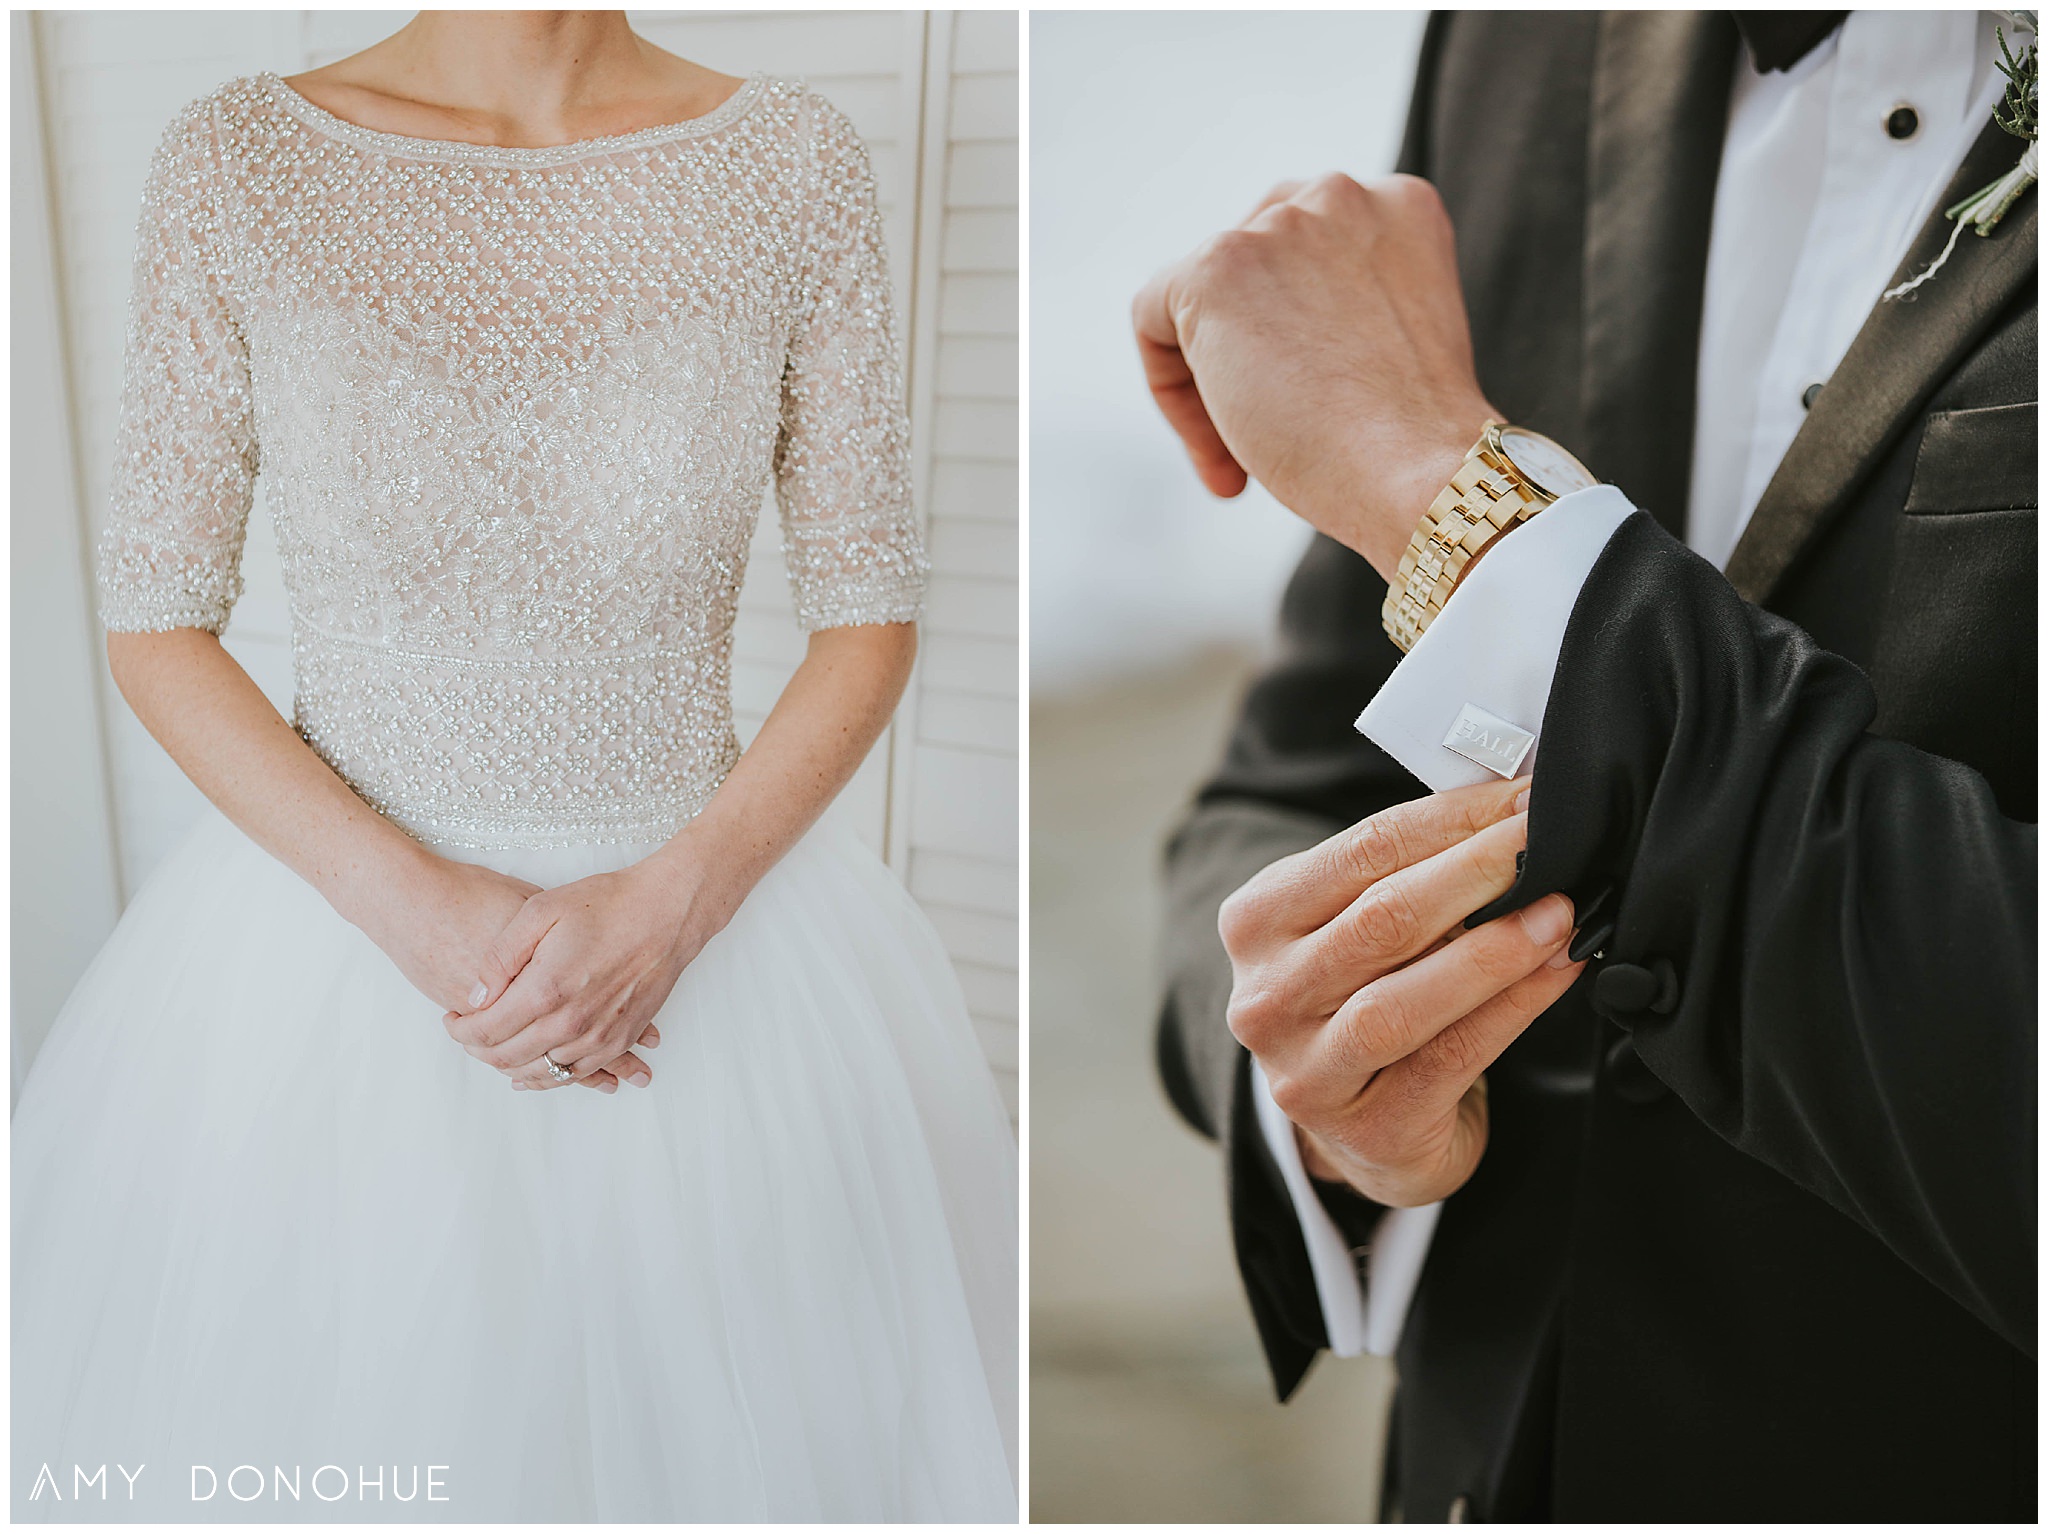 Maggie Sottero dress details and groom cufflink details